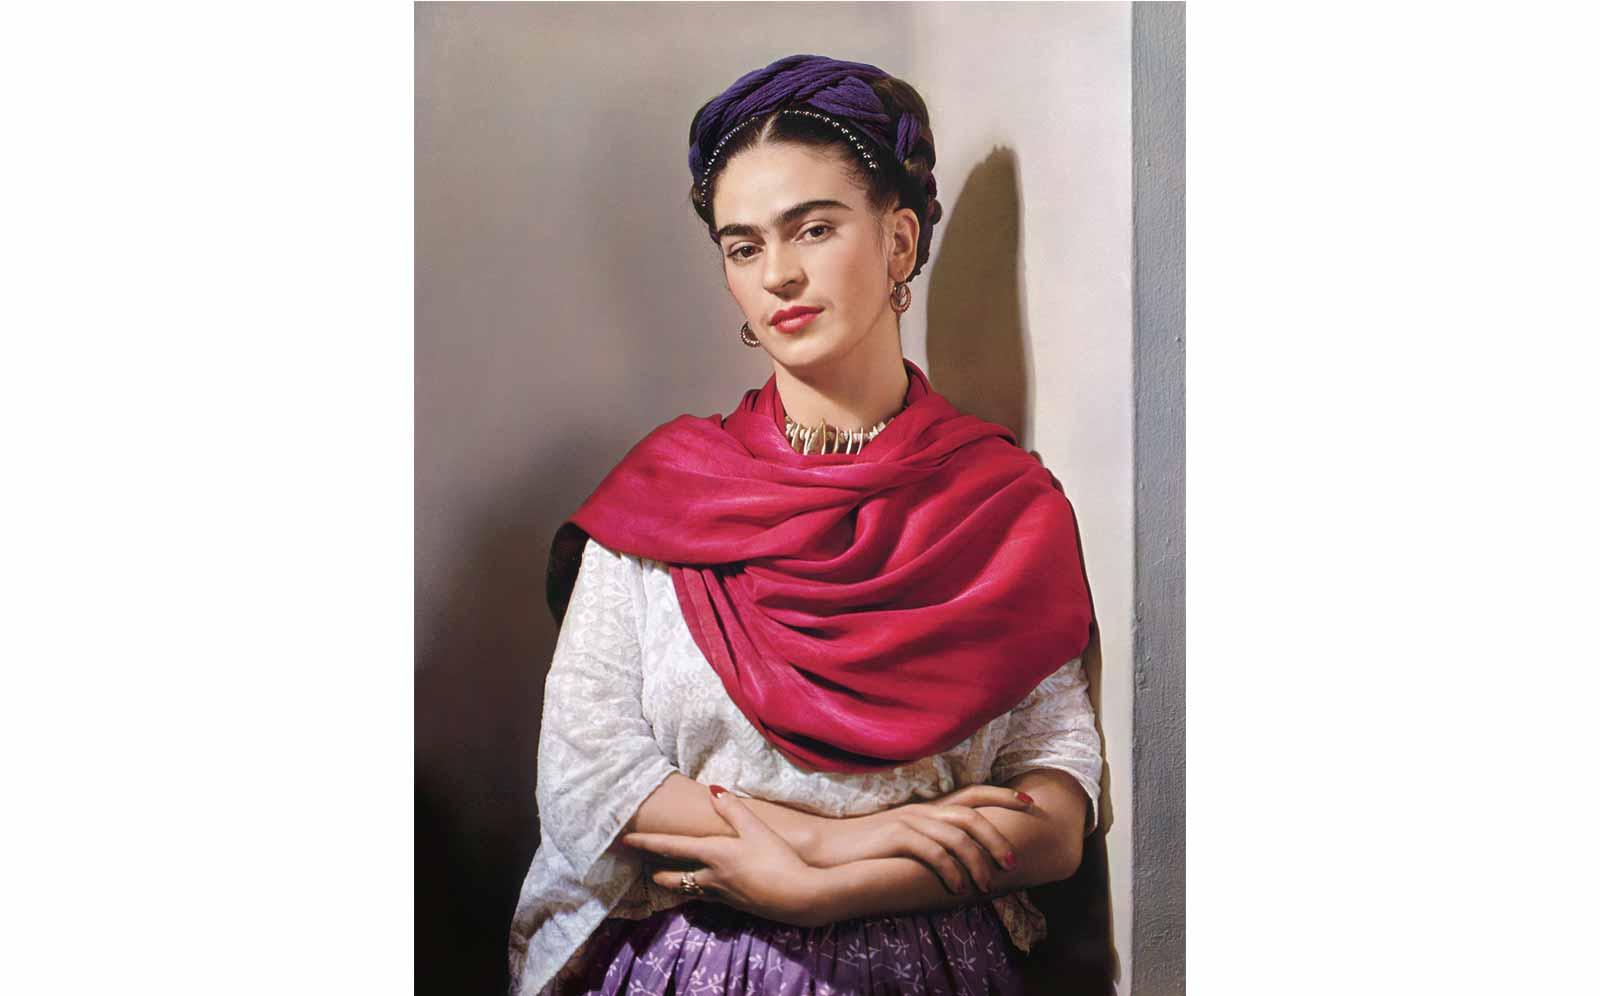 Nickolas Muray, Frida with Red “Rebozo,” 1939.